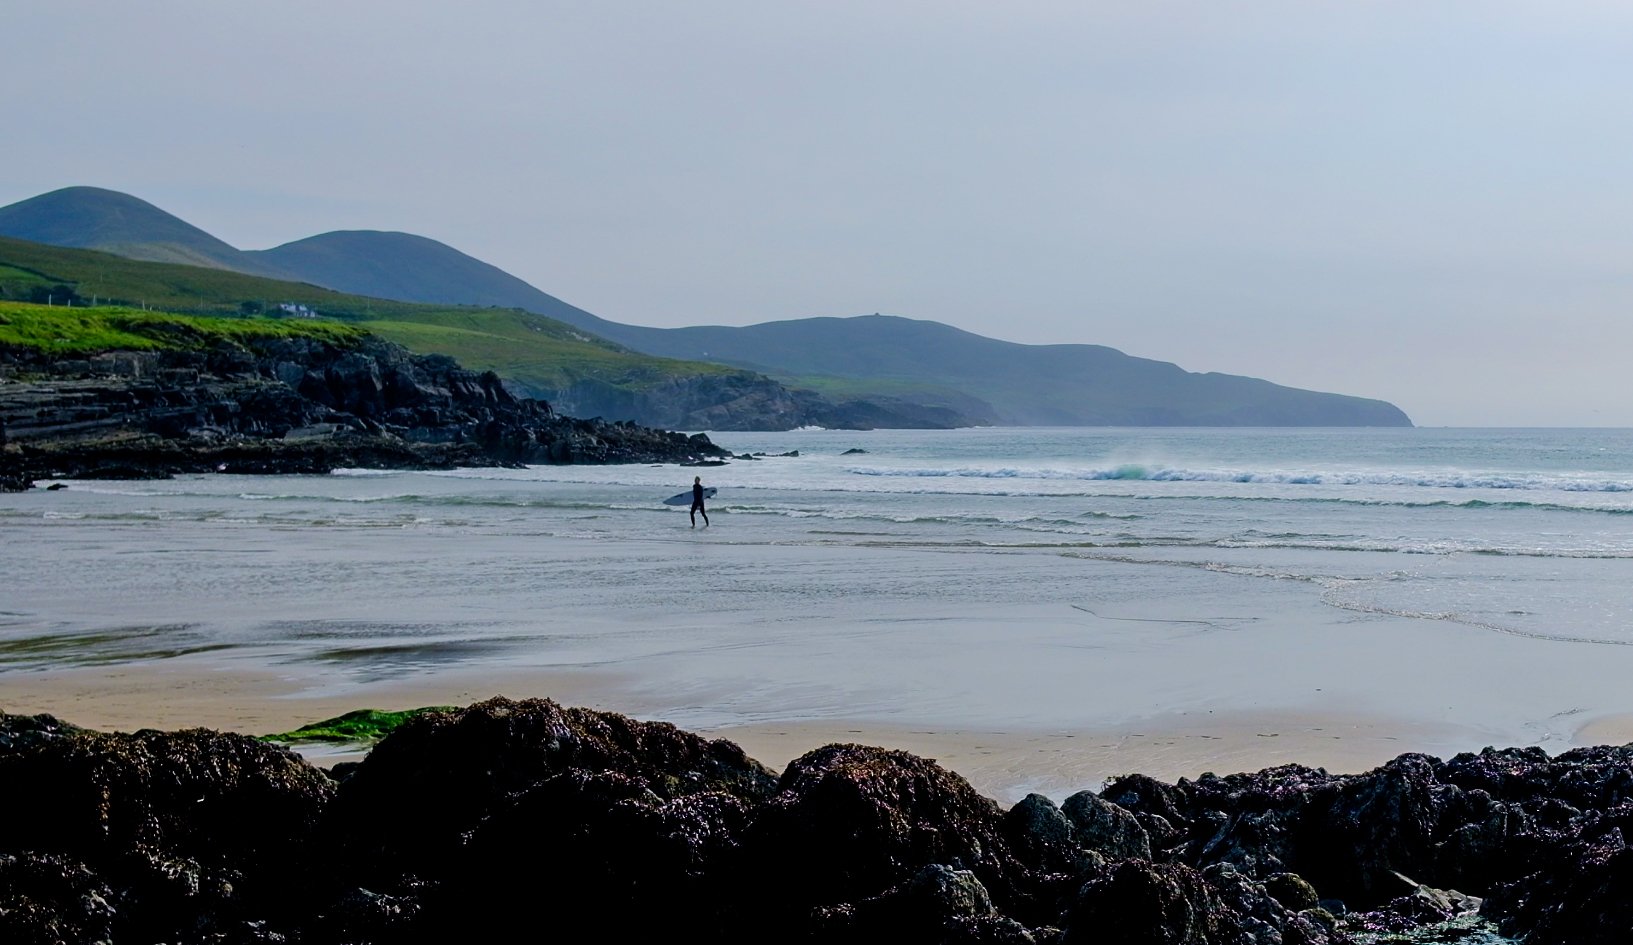 7b_Surfing in the Atlantic with stunning scenery. Photo credit Calum Sweeney.jpg